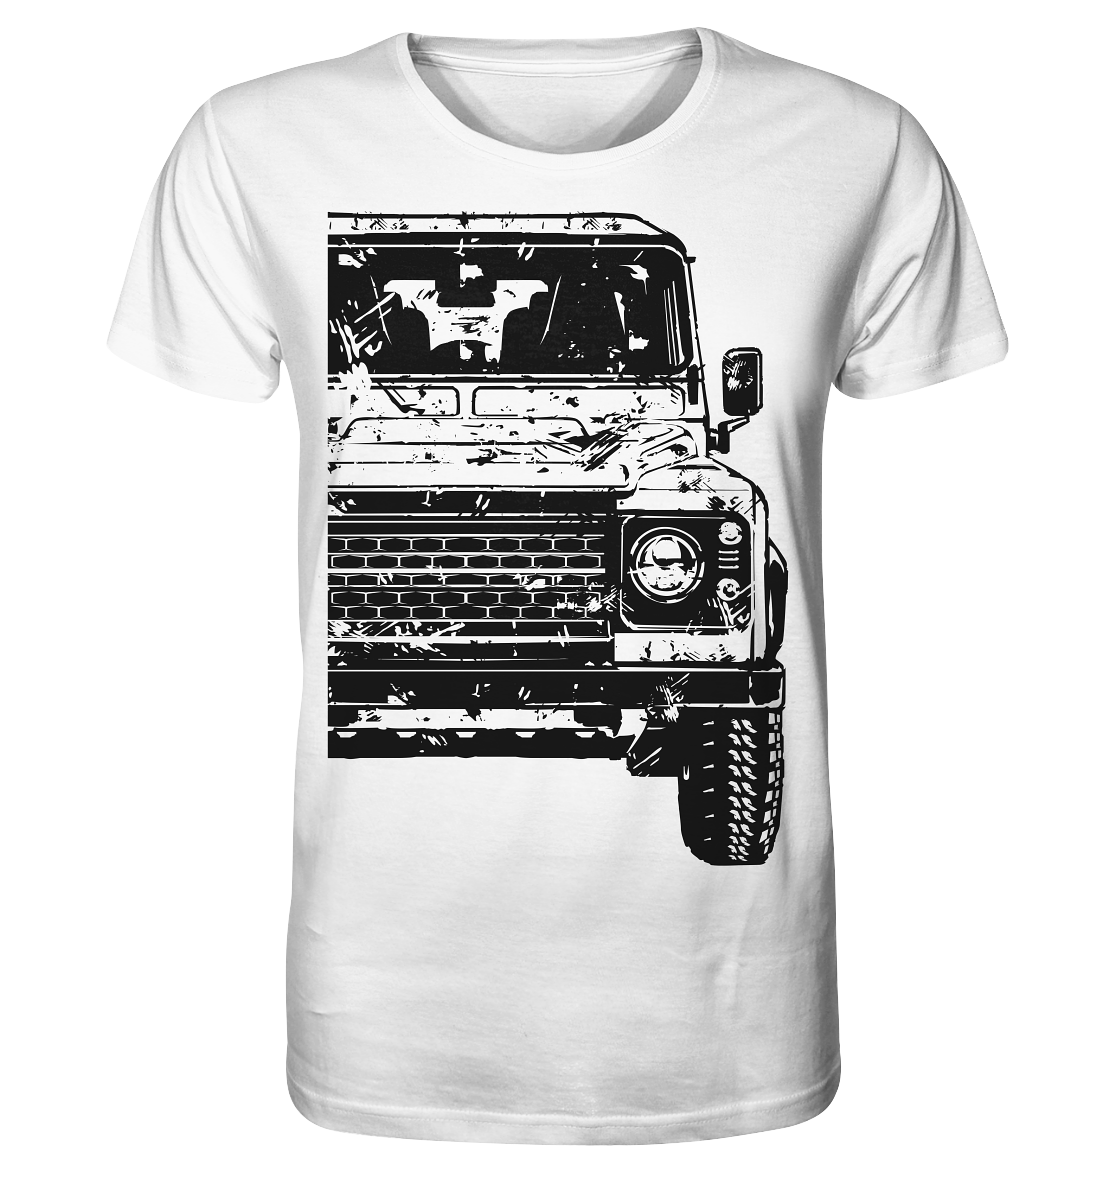 COD_LRGKD2015OLS - Organic Shirt